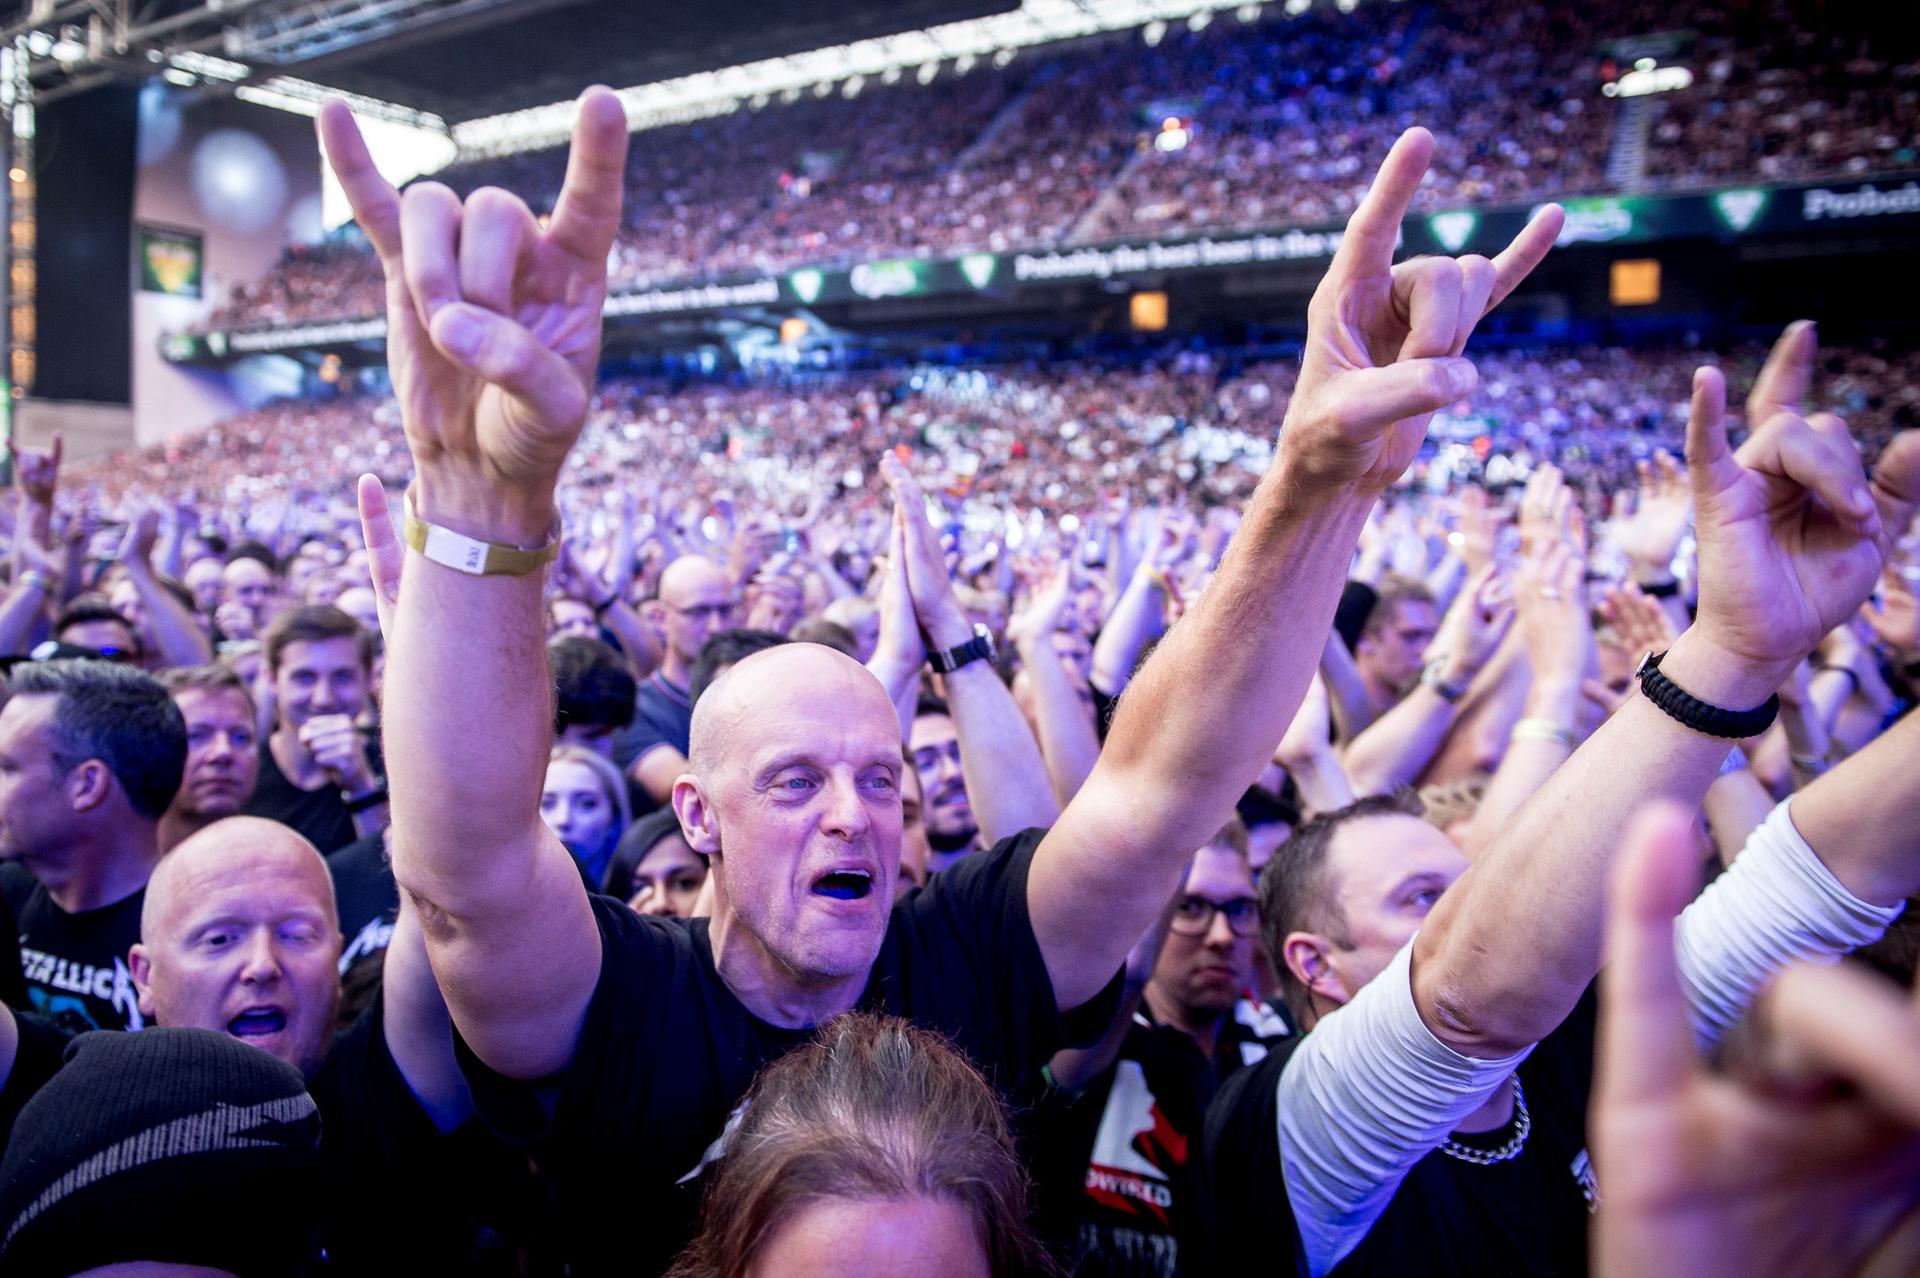 a crowd at a Metallica concert in Denmark.